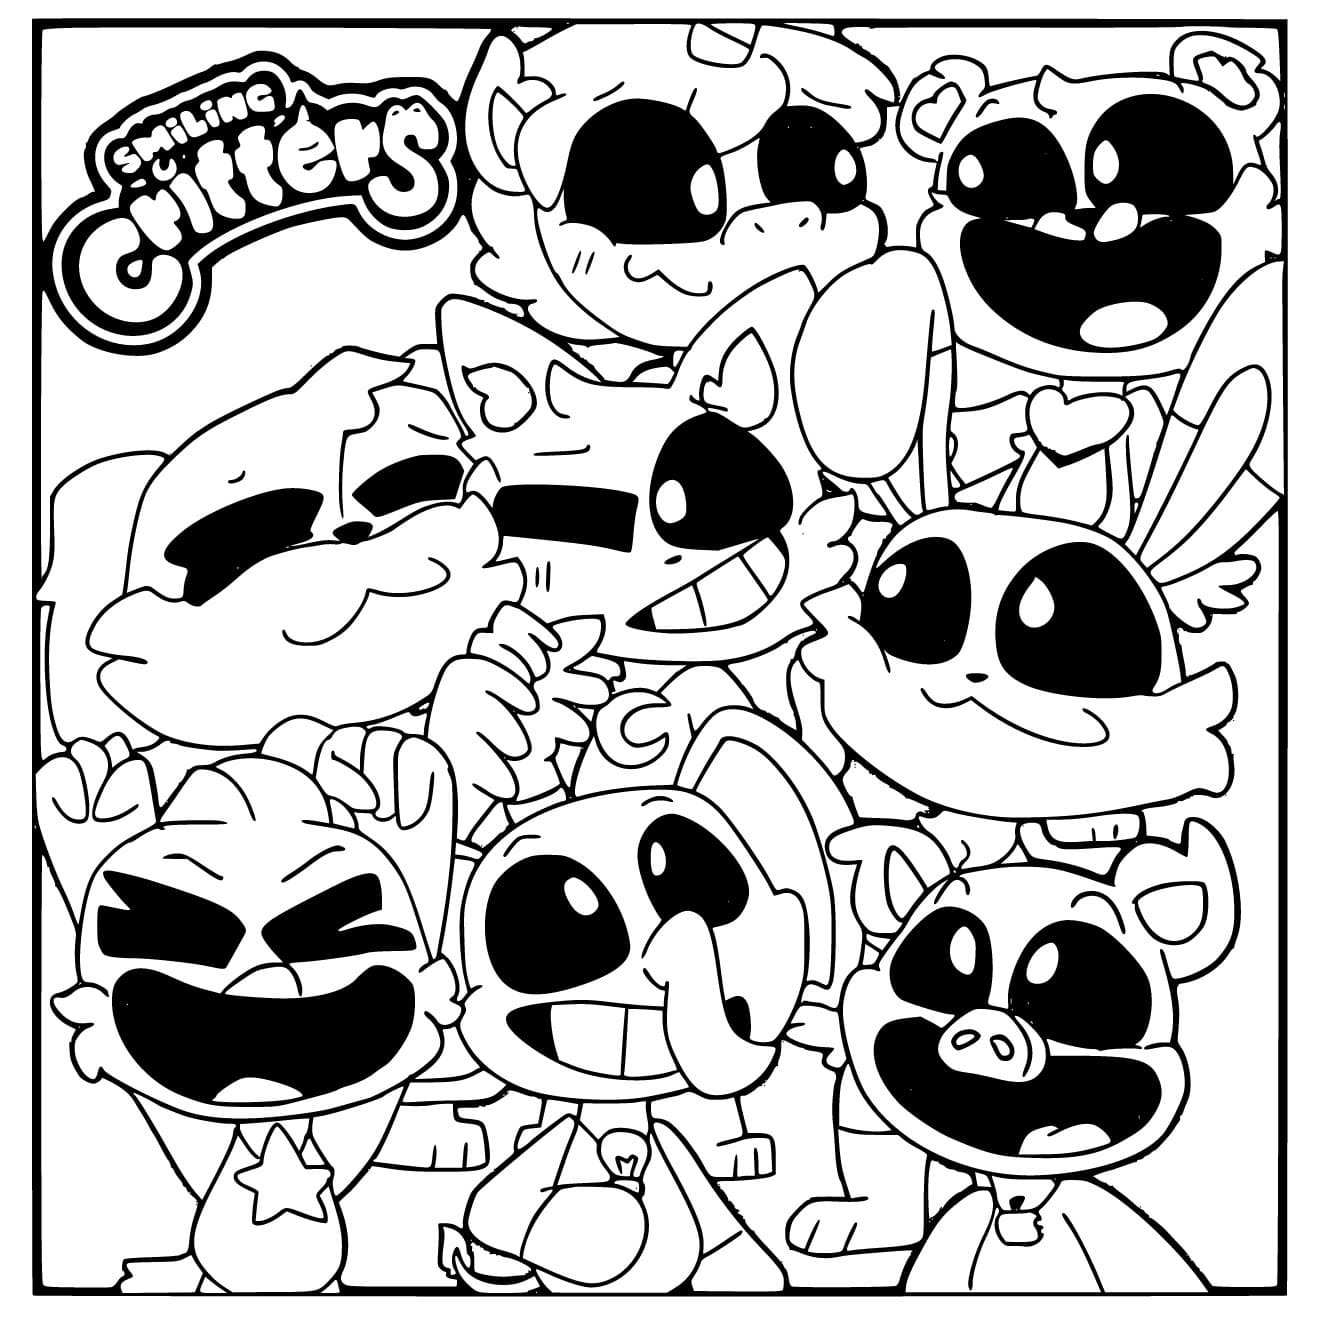 Personnages Mignons de Smiling Critters coloring page